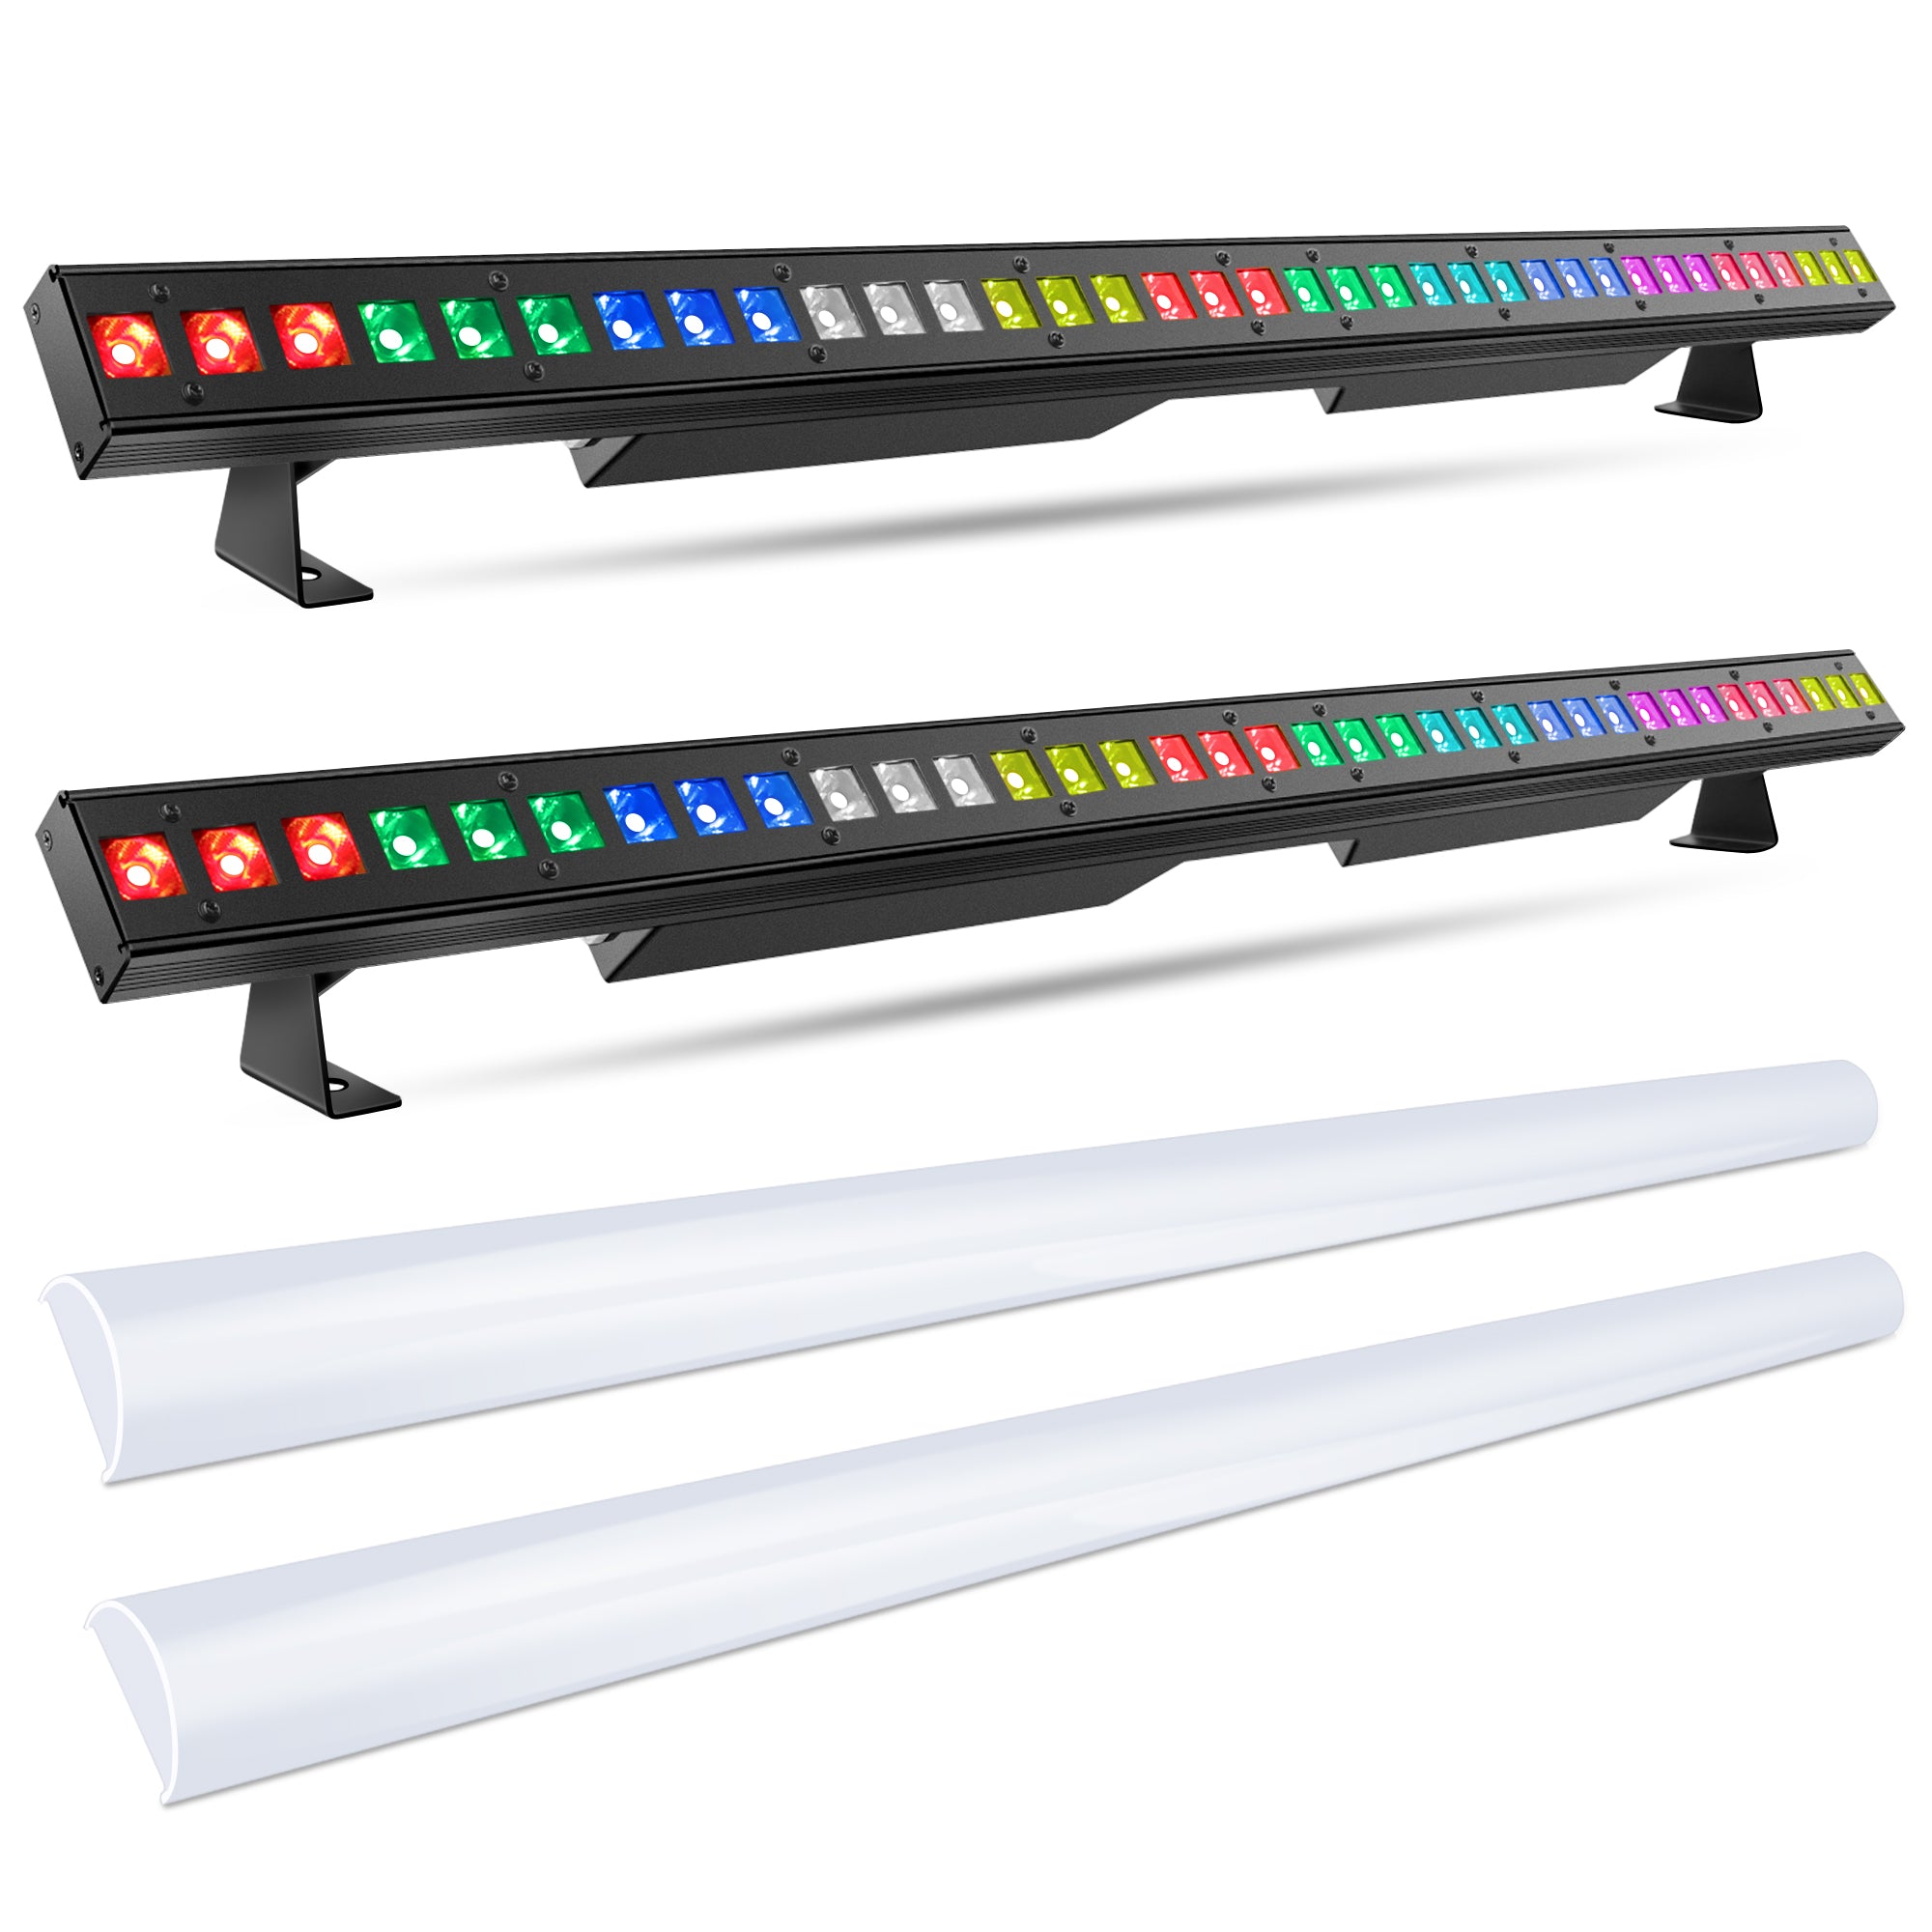 Shop 1m LED Stage Wash Light Bar - RGBW 4in1